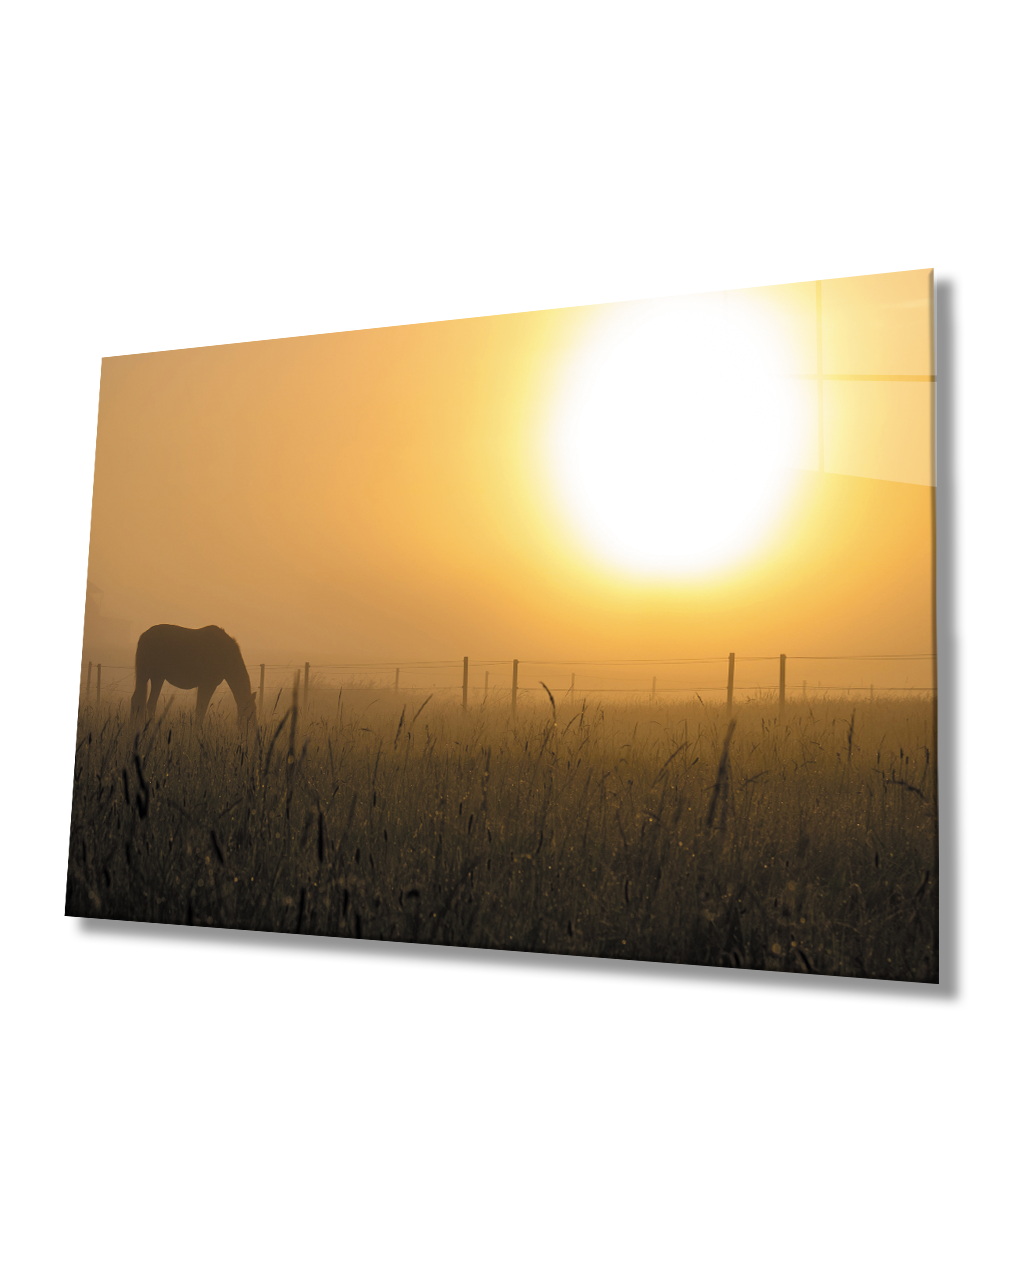 Gün Batımı At Cam Tablo  4mm Dayanıklı Temperli Cam Sunset Horse Glass Table 4mm Durable Tempered Glass